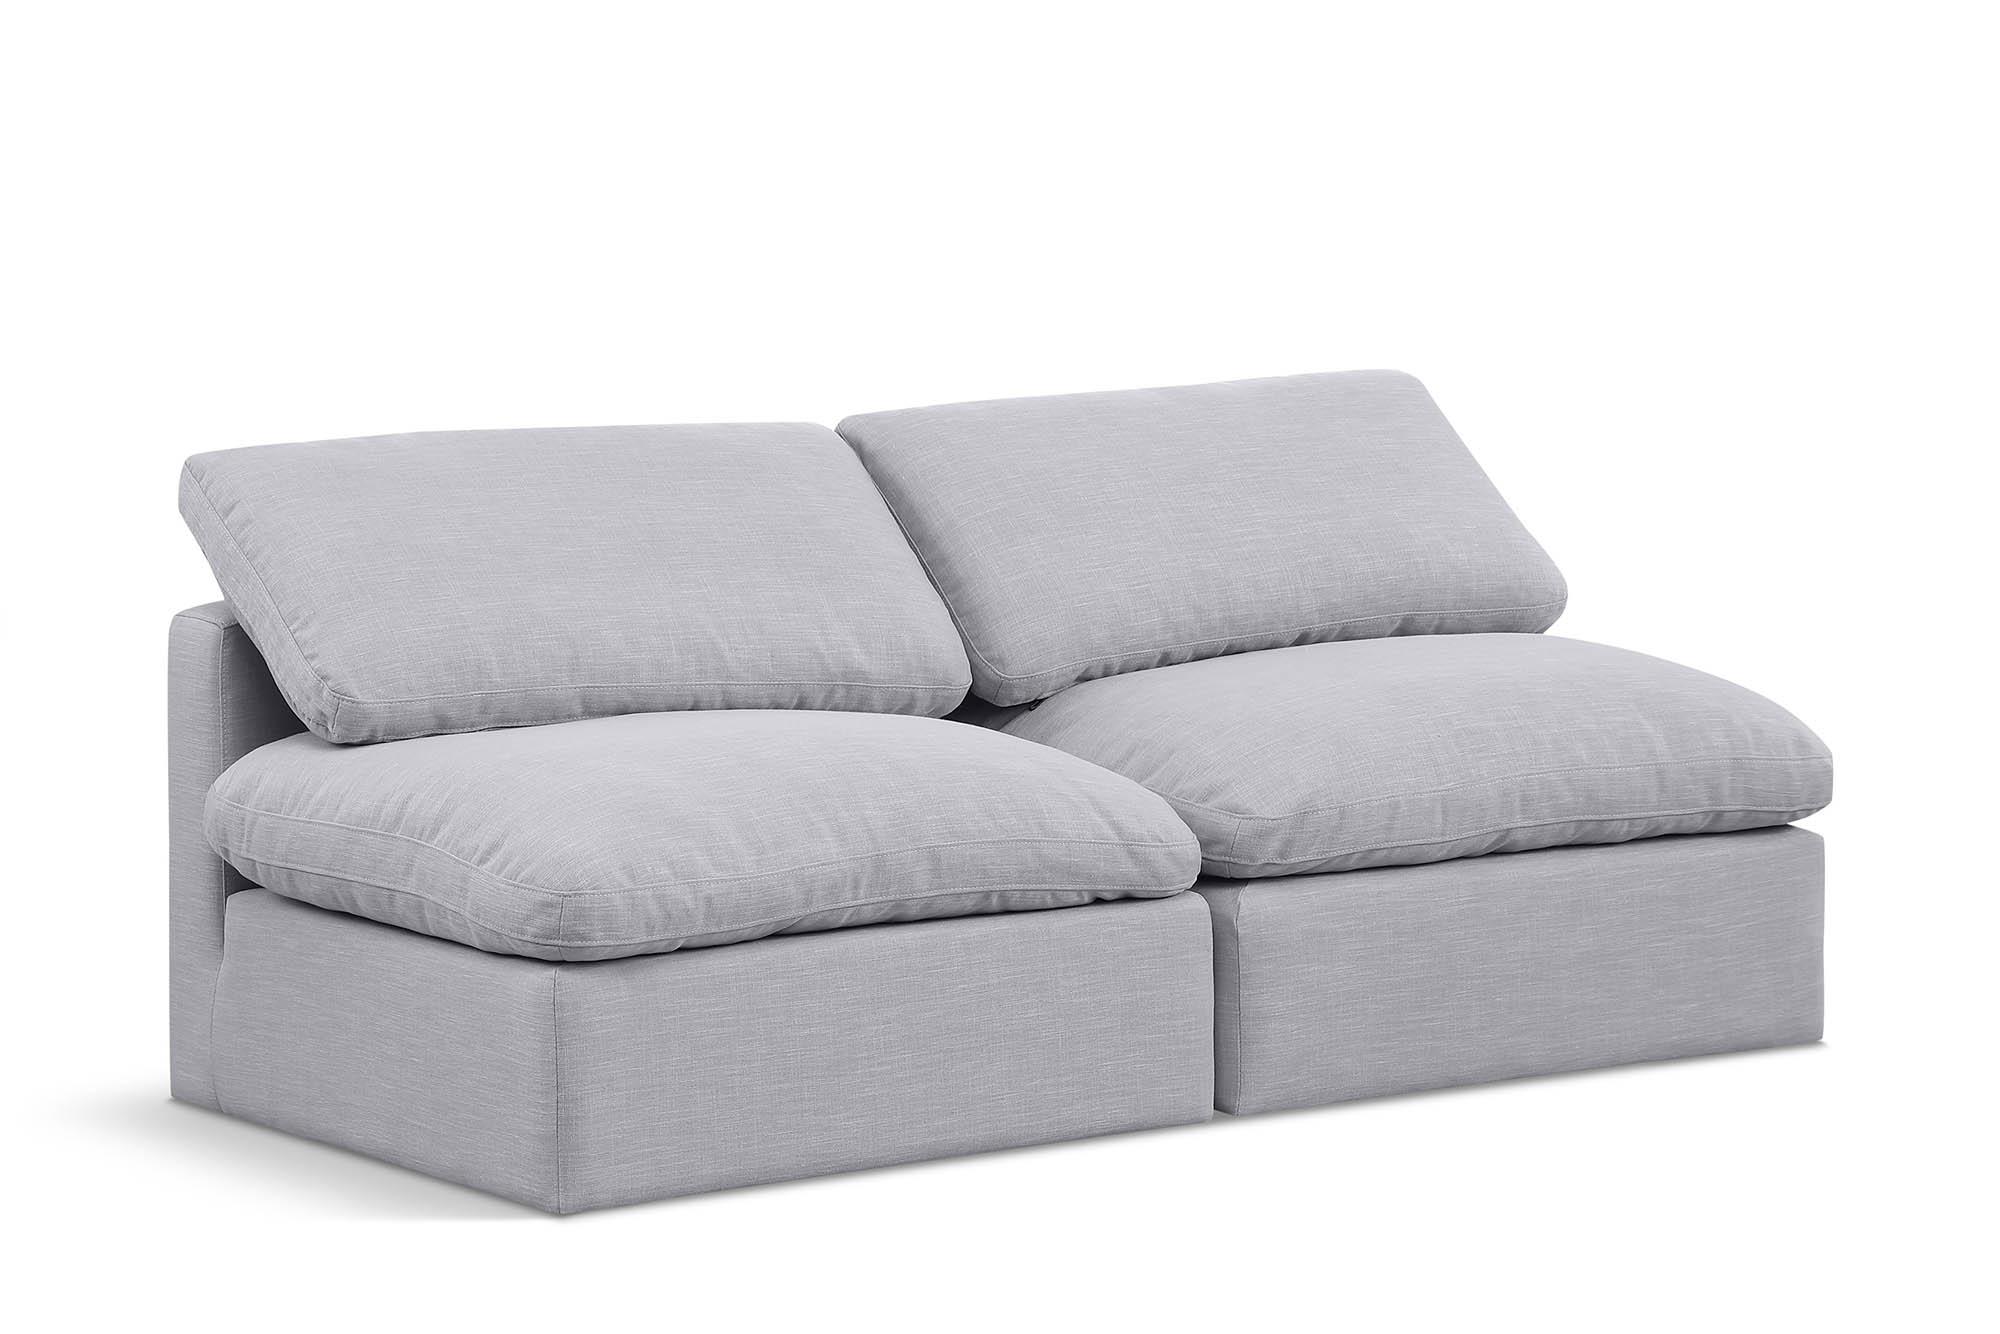 Contemporary, Modern Modular Sofa INDULGE 141Grey-S2 141Grey-S2 in Gray Linen